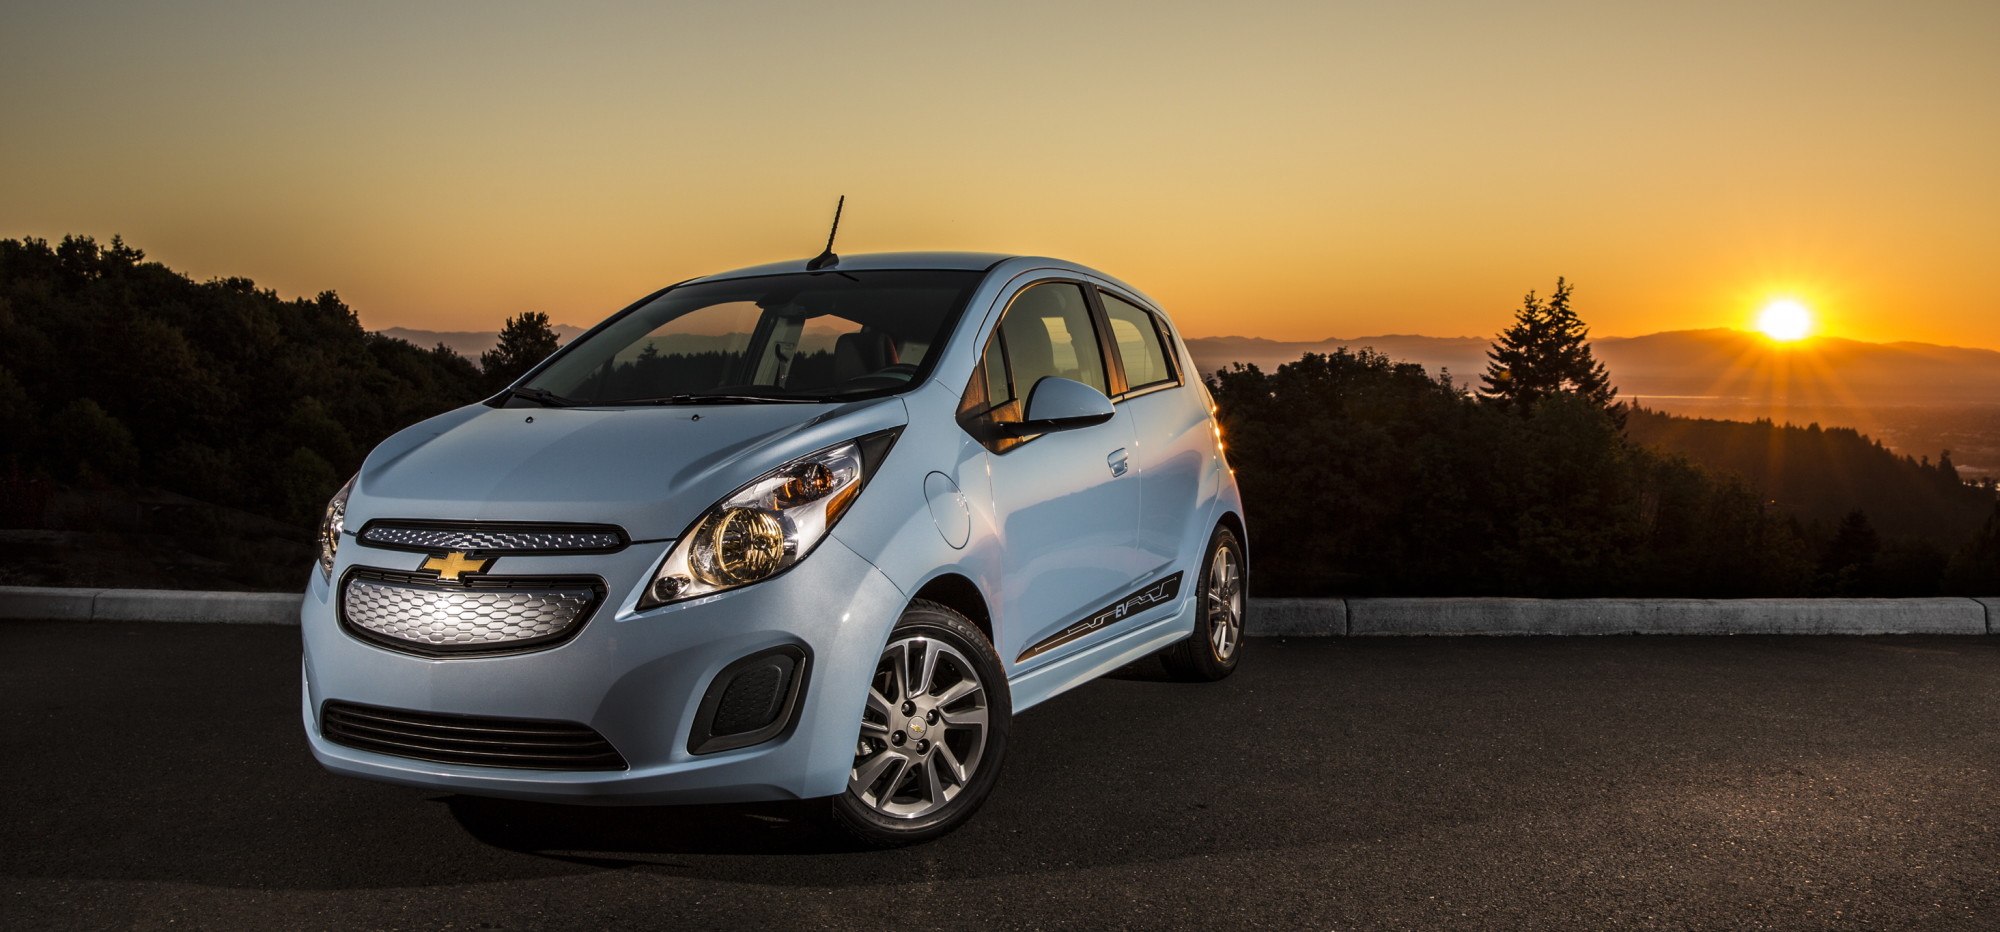 Top 10 Best Fuel Economy Cars for 2014 Clean Fleet Report